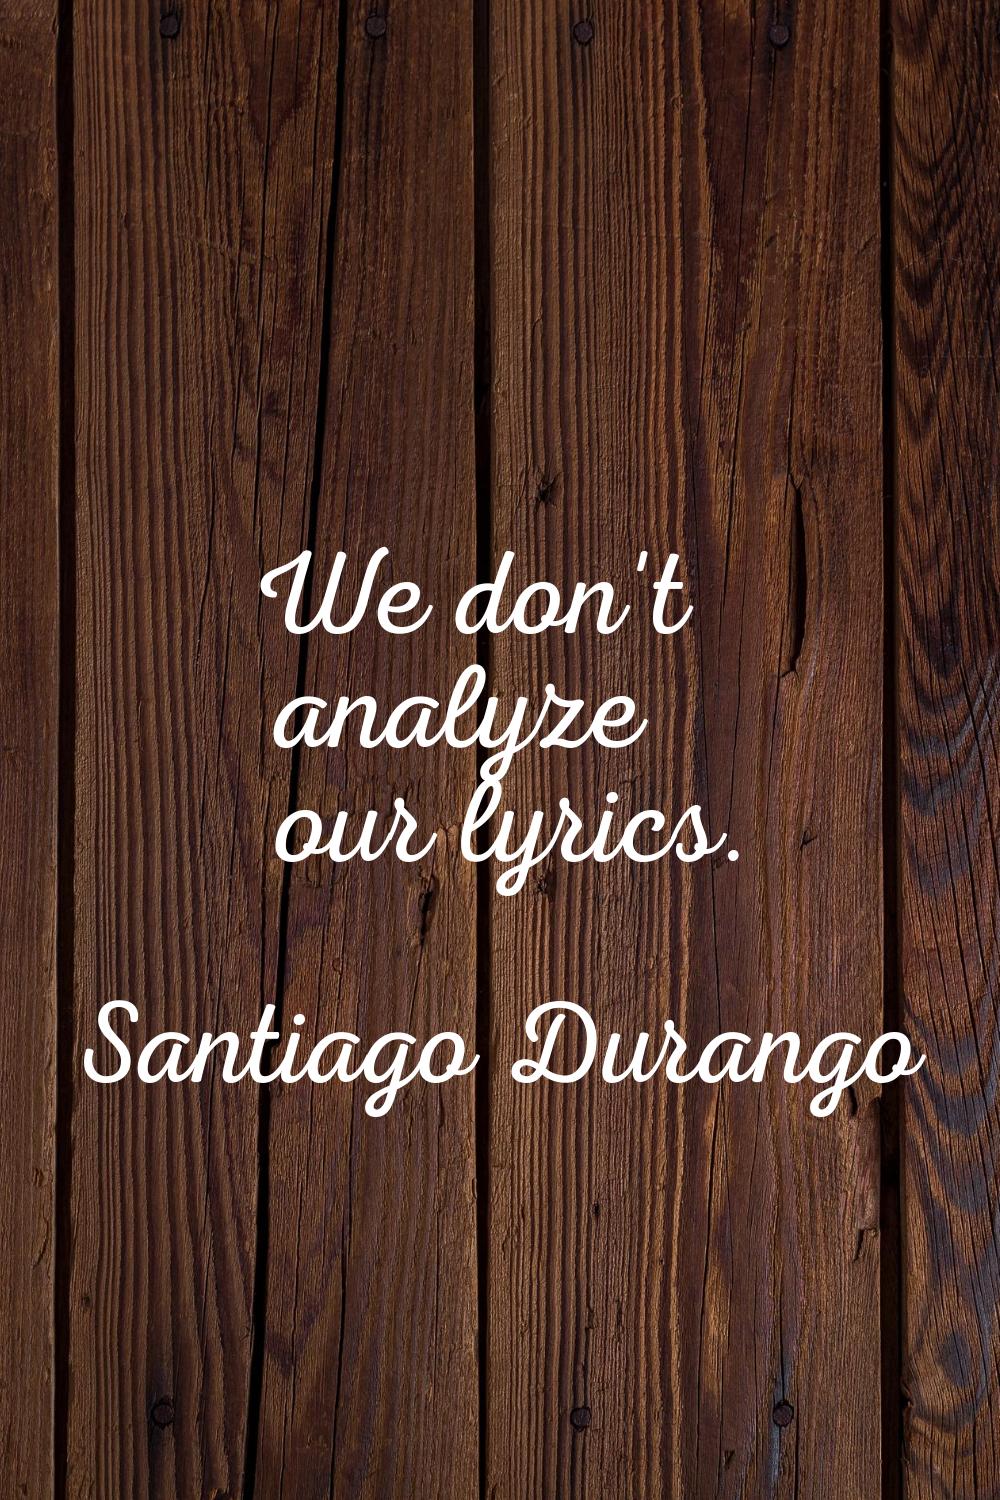 We don't analyze our lyrics.